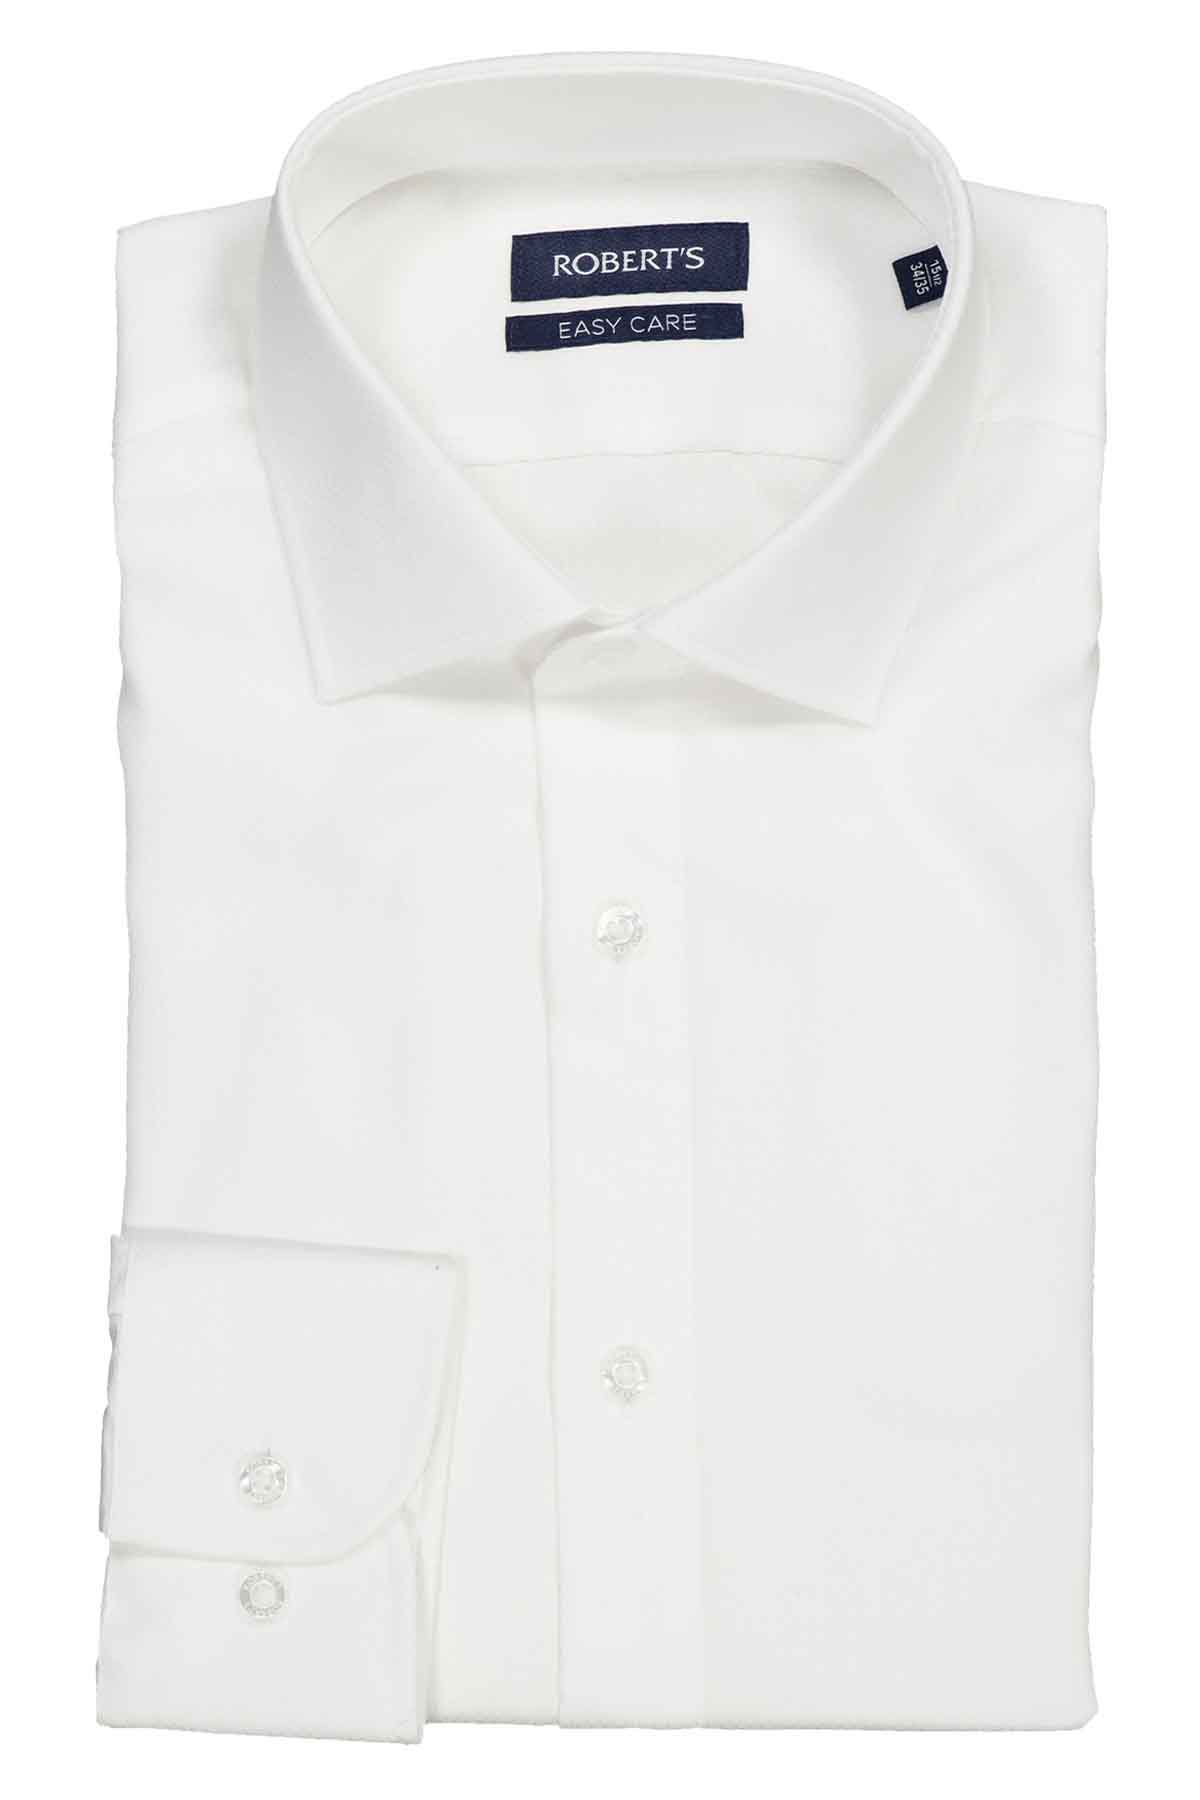 Camisa Roberts Easy Care Slim Fit Color Blanco